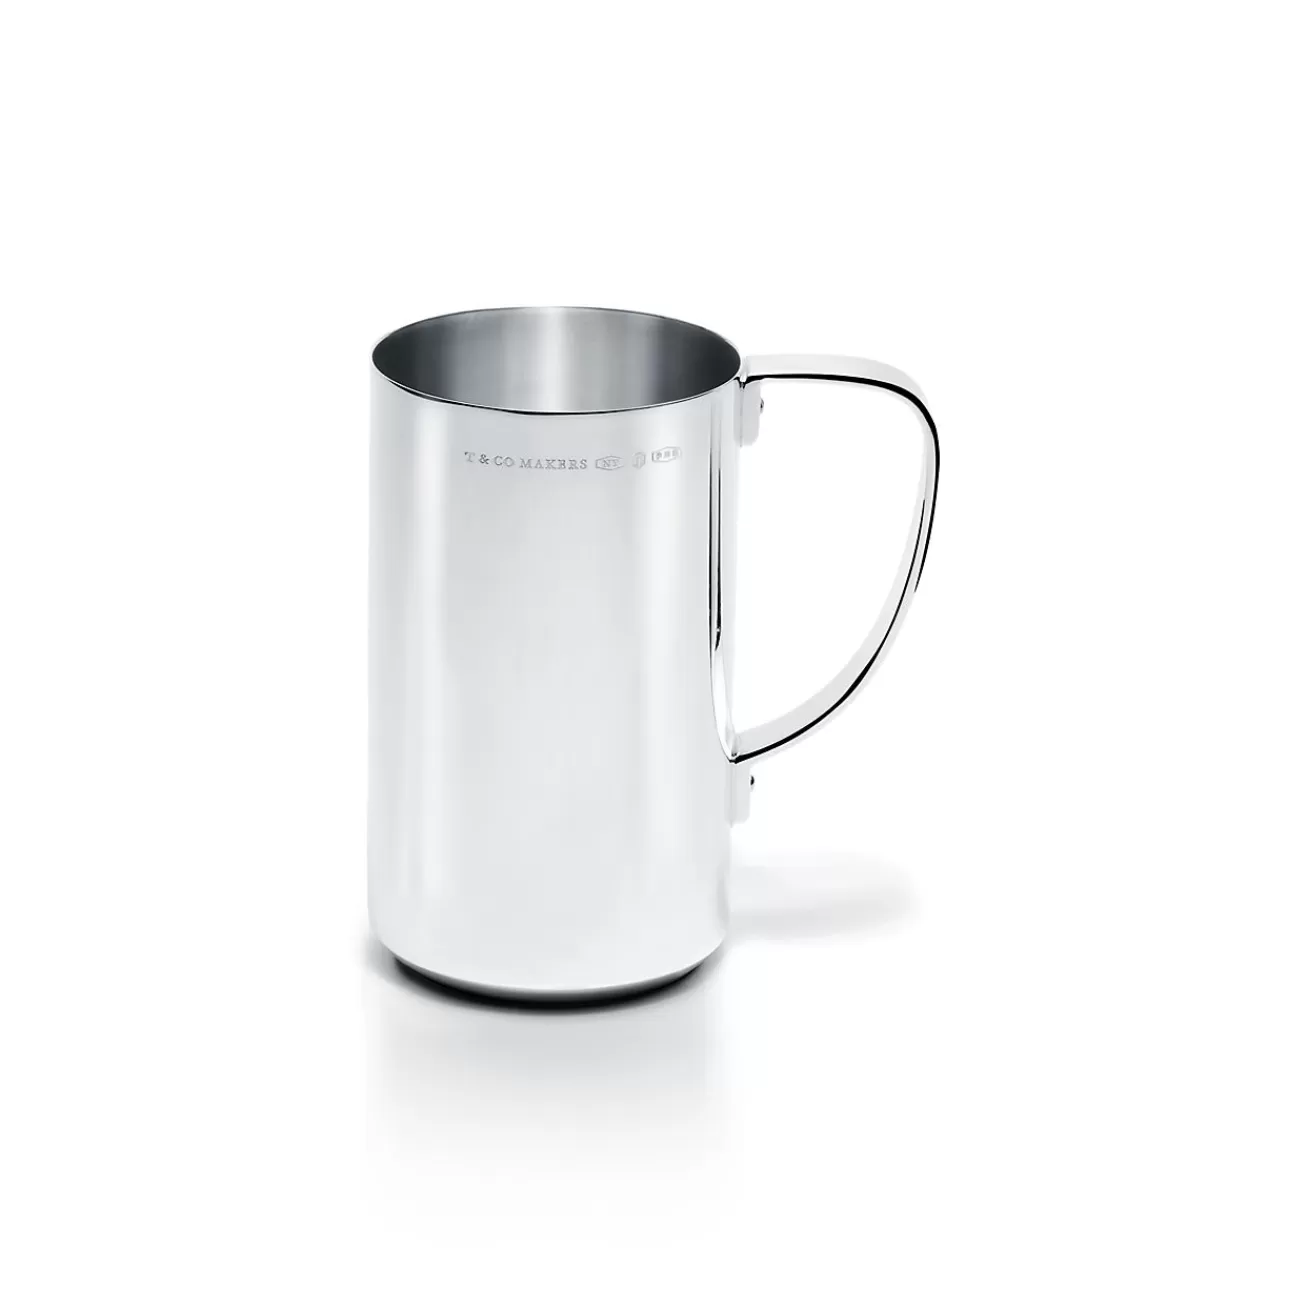 Tiffany & Co. Tiffany 1837 Makers beer mug in sterling silver. | ^ Glassware & Barware | Bar & Drinkware